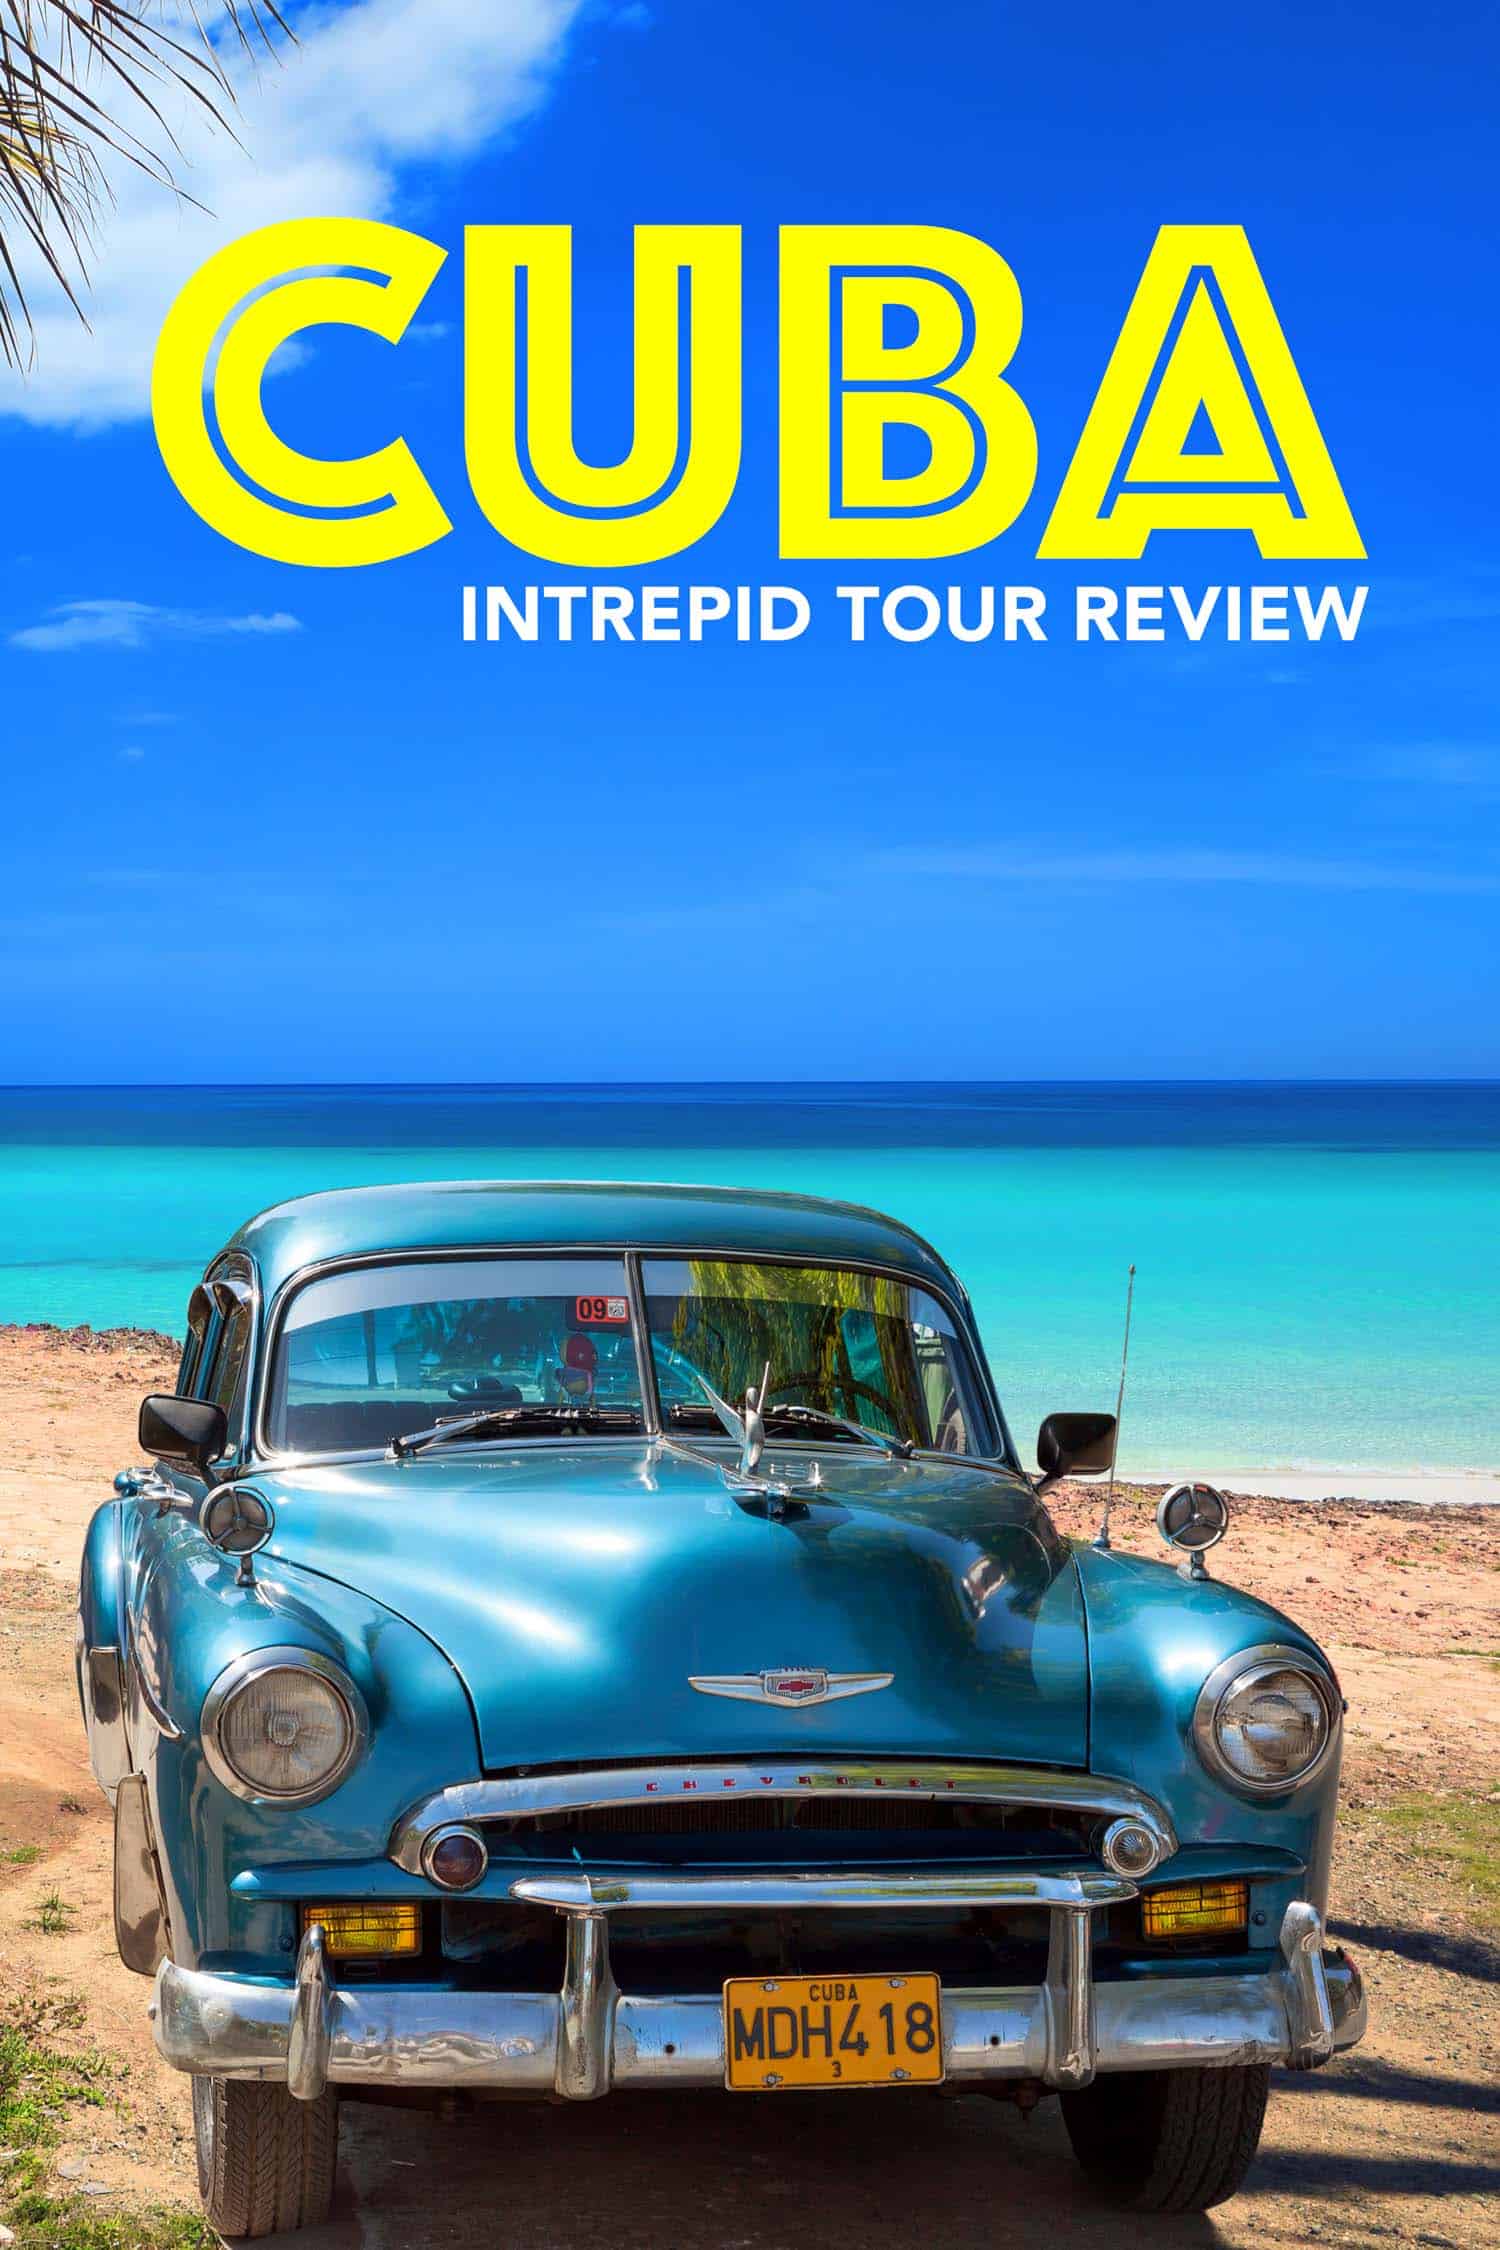 Vintage car by the beach in Cuba